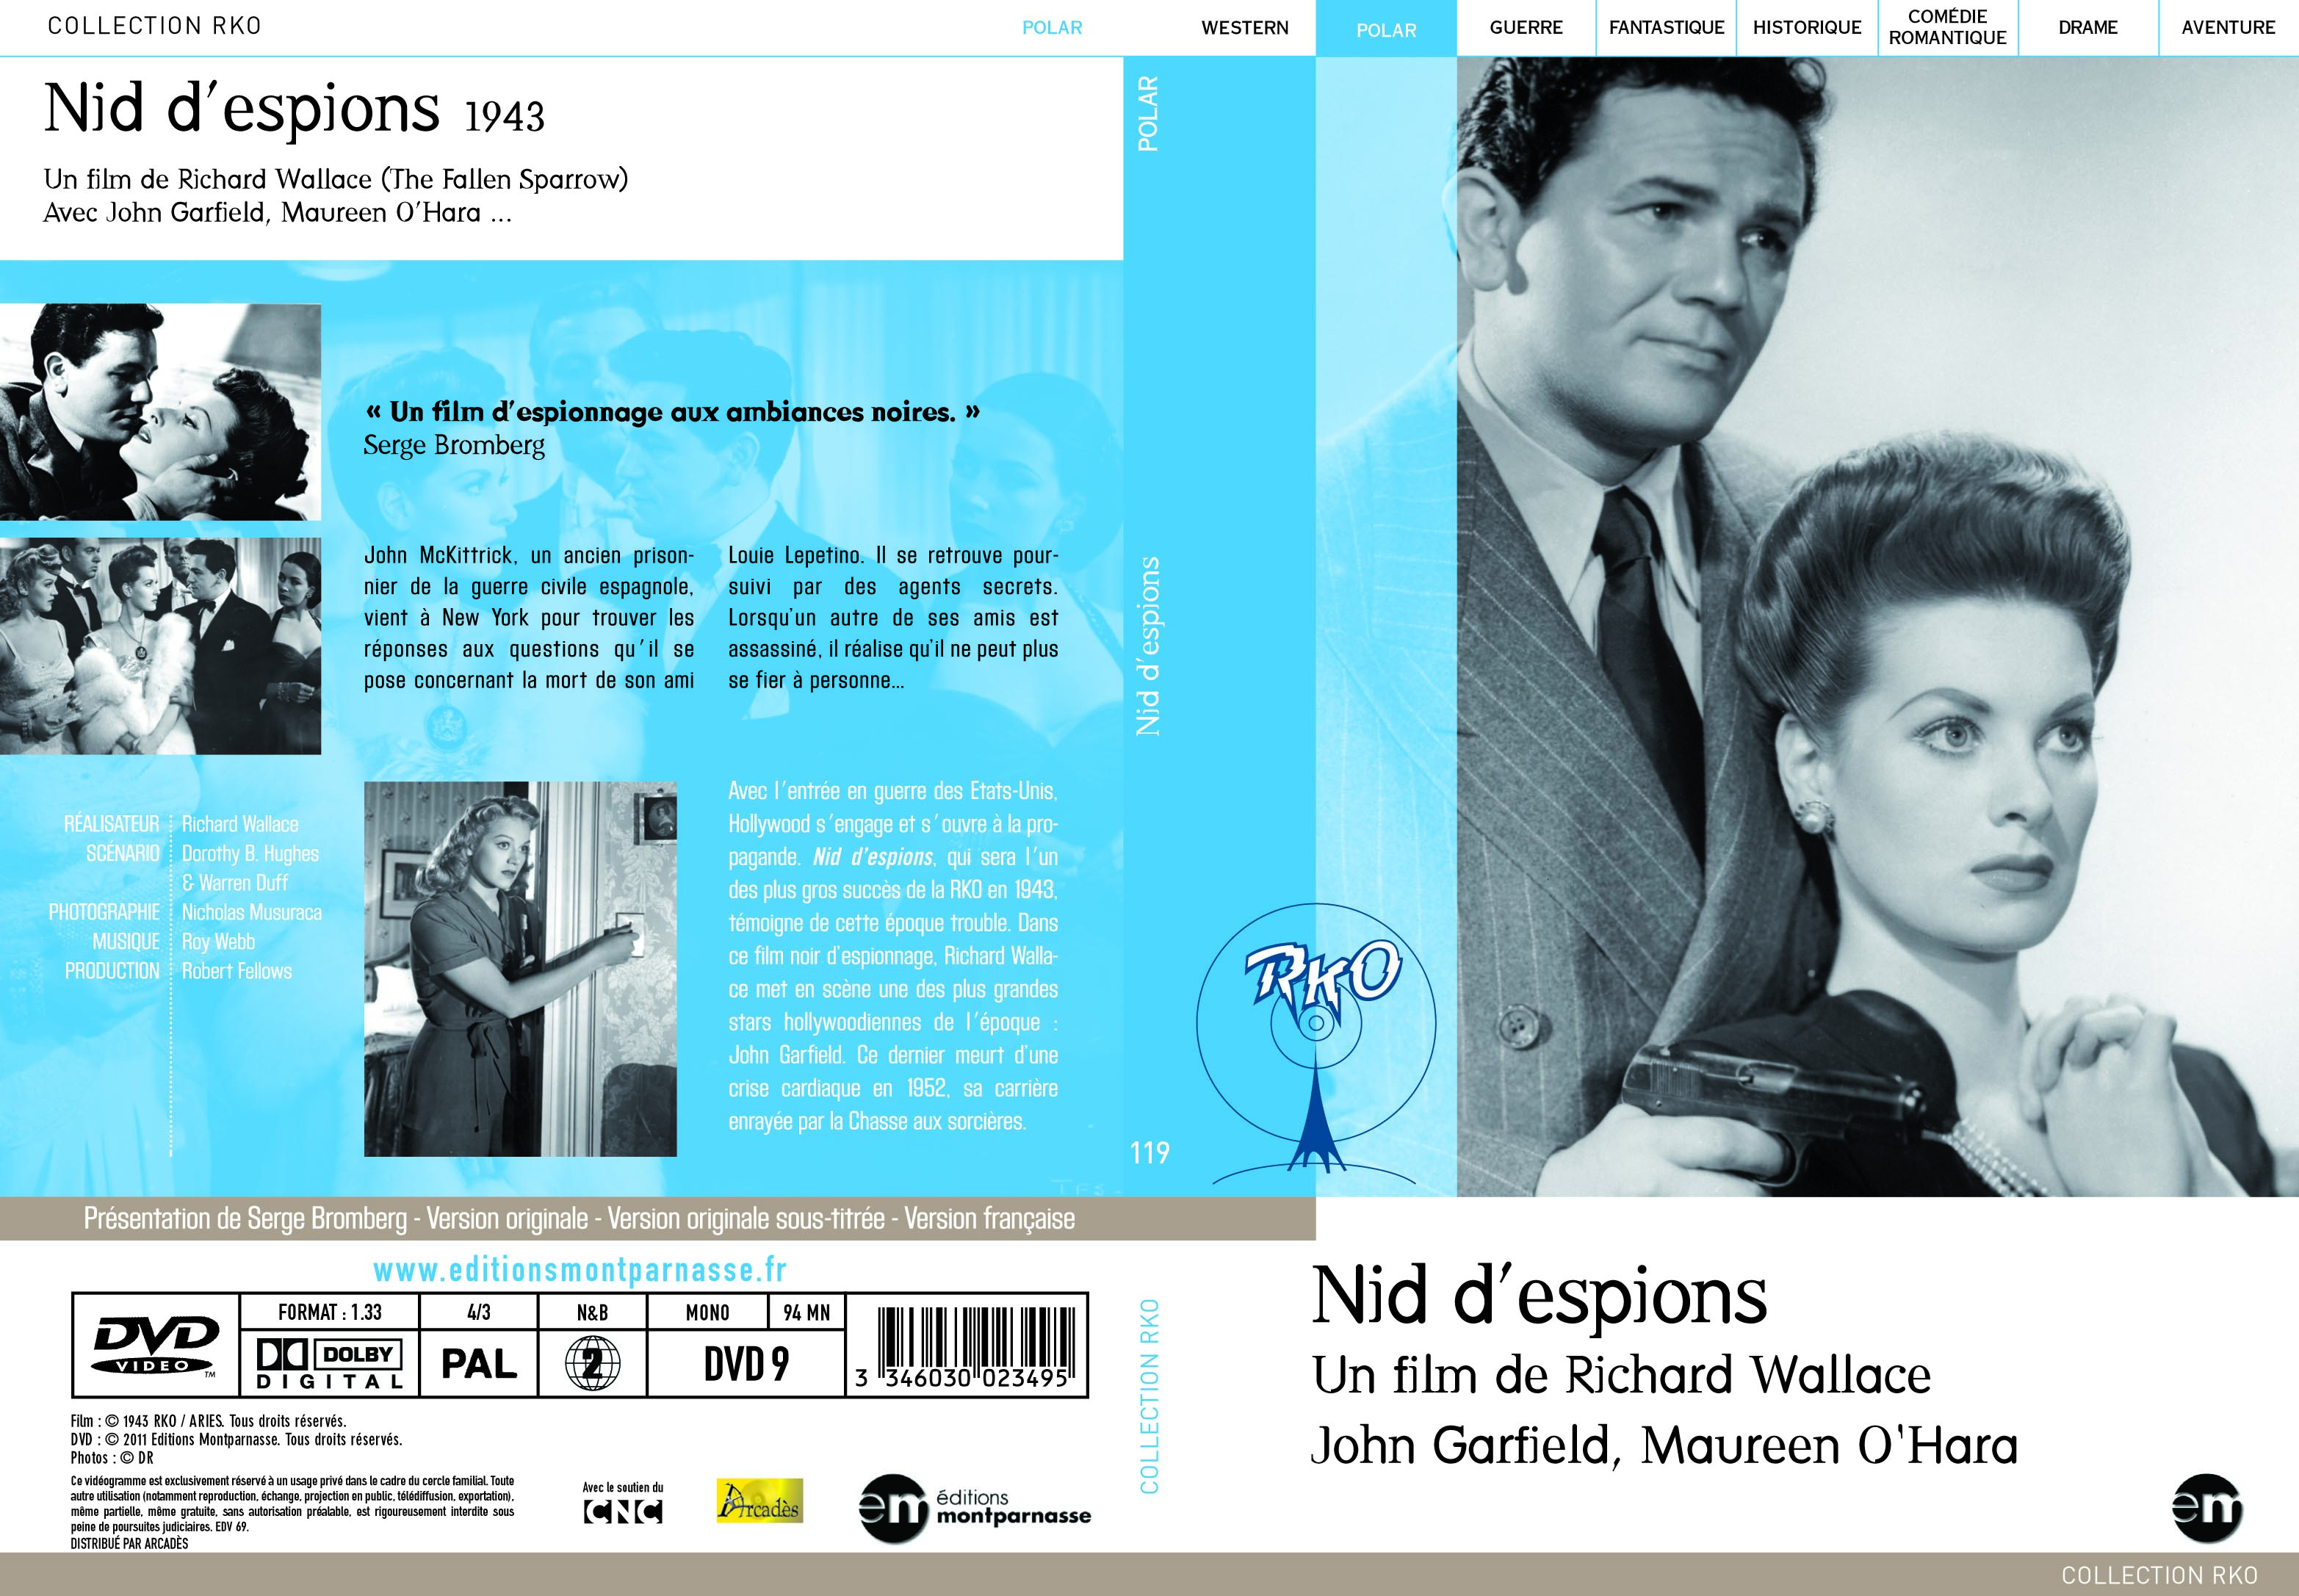 Jaquette DVD Nid d